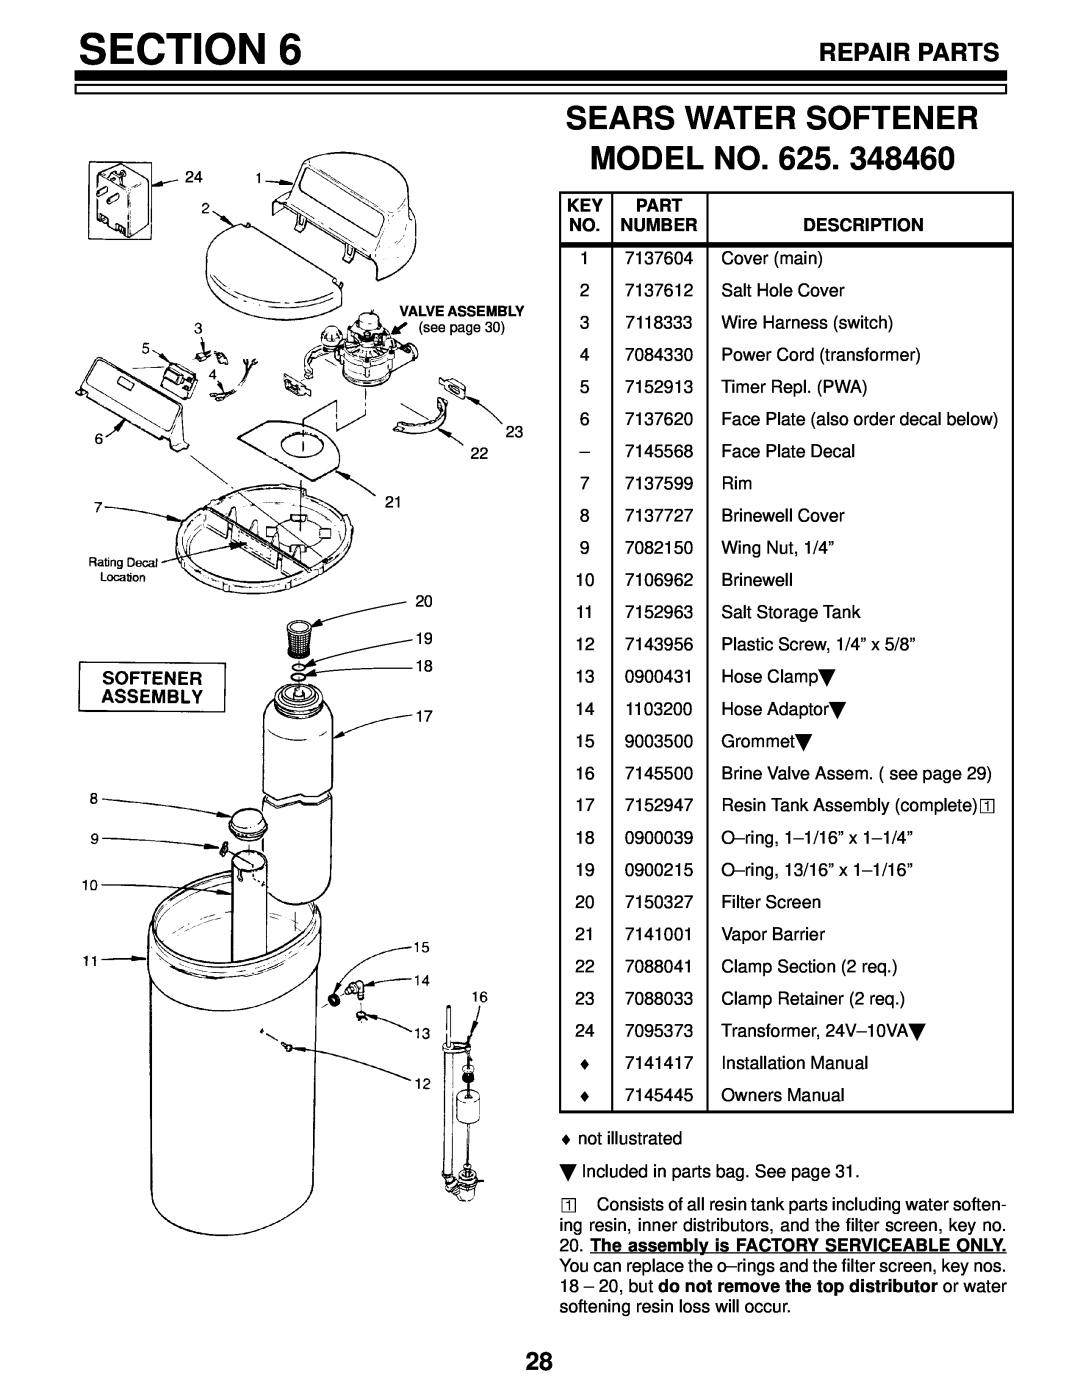 Kenmore 625.348460 owner manual SEARS WATER SOFTENER MODEL NO. 625, Section, Repair Parts, Number, Description 